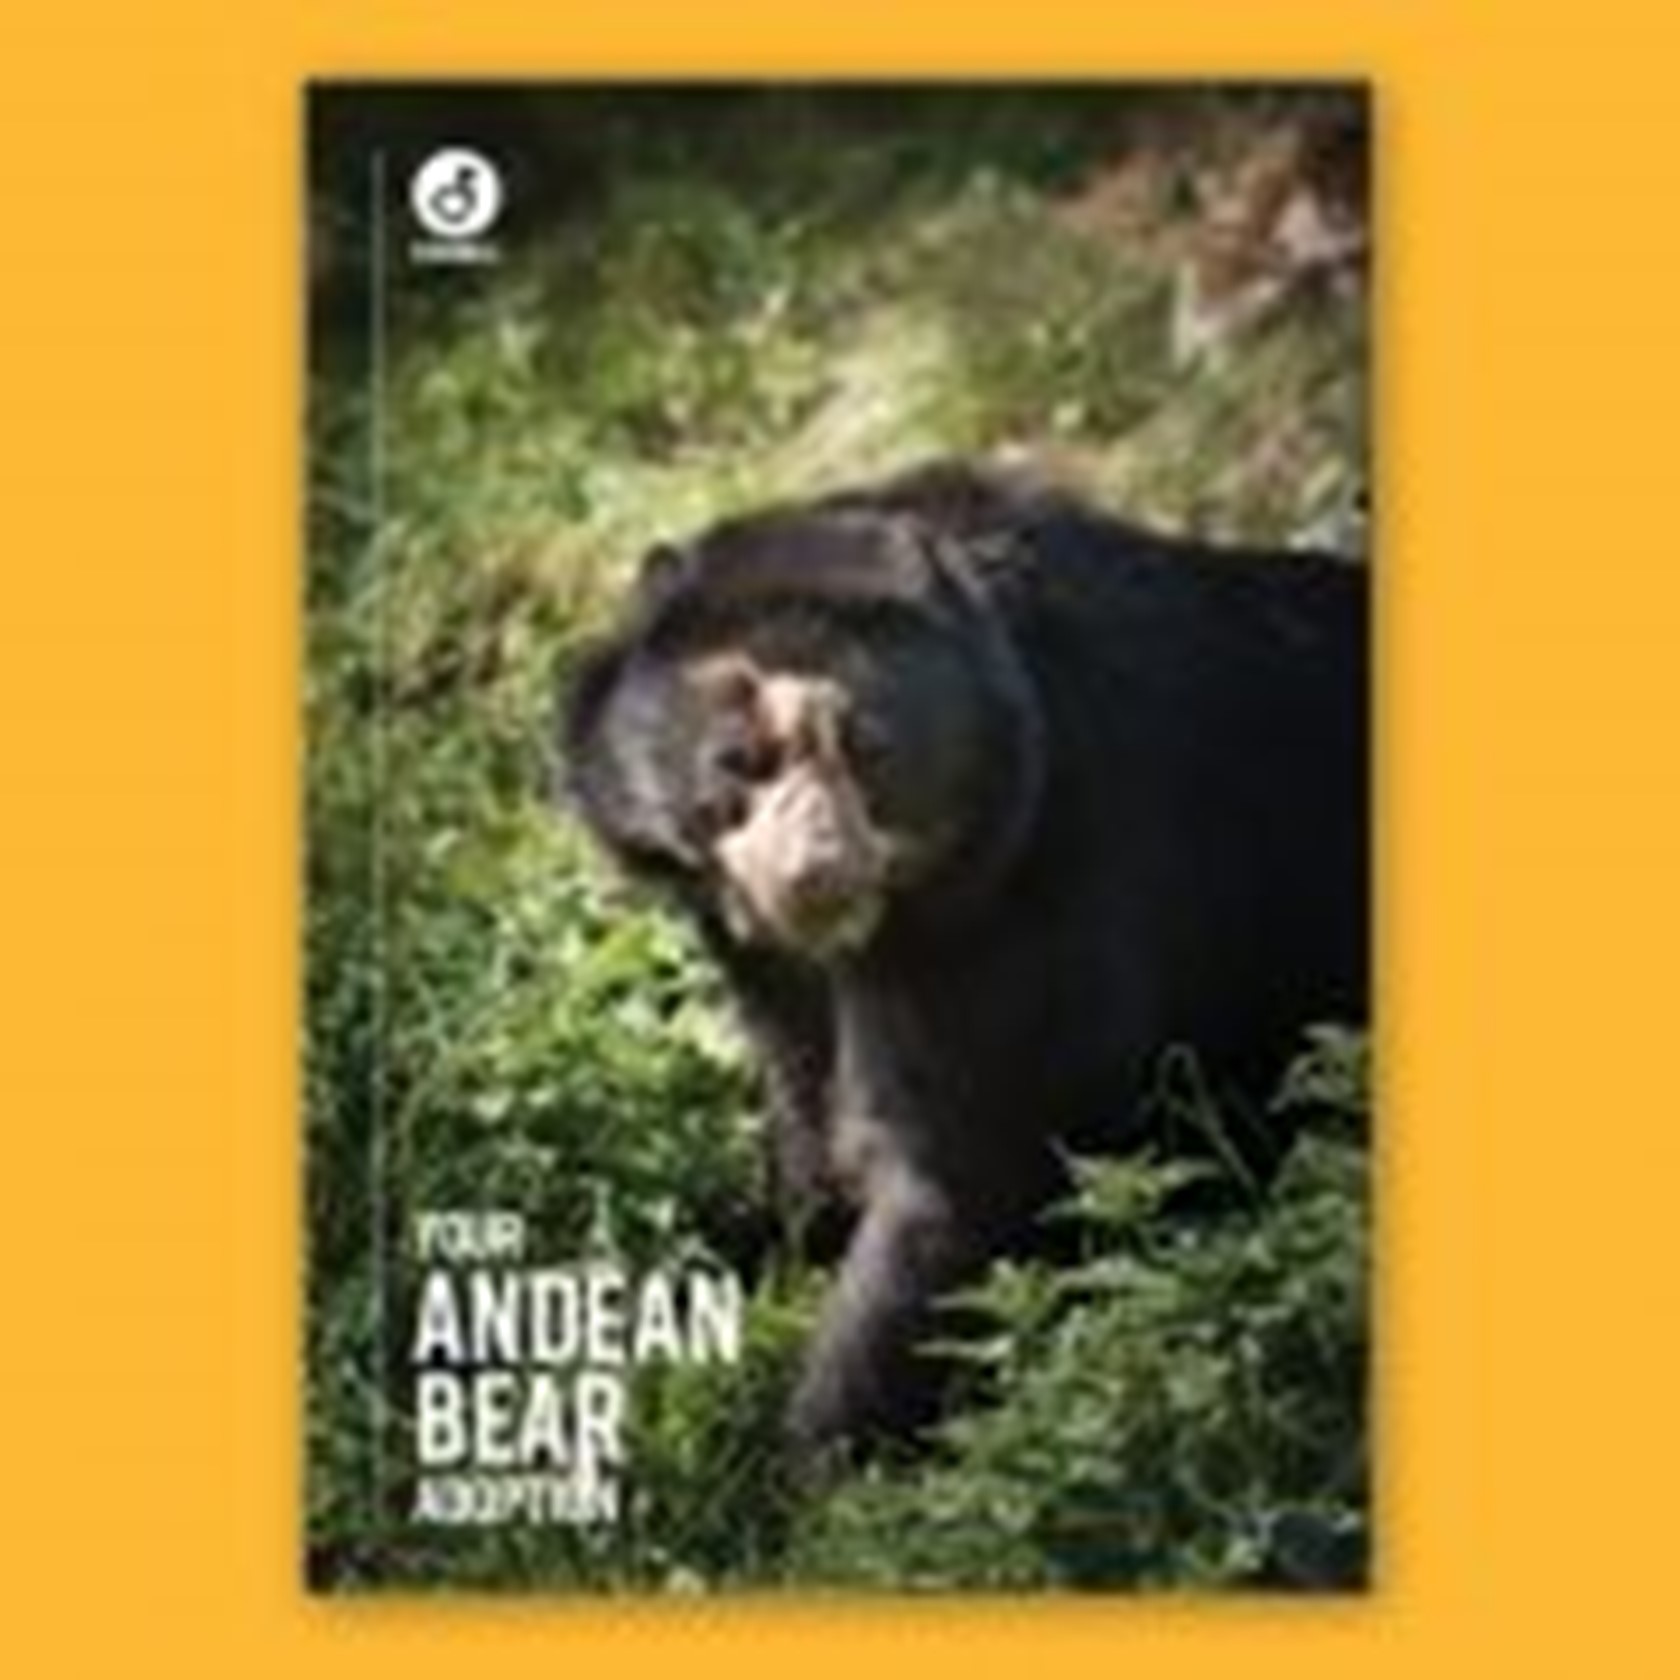 Digital Adoption - Andean bears